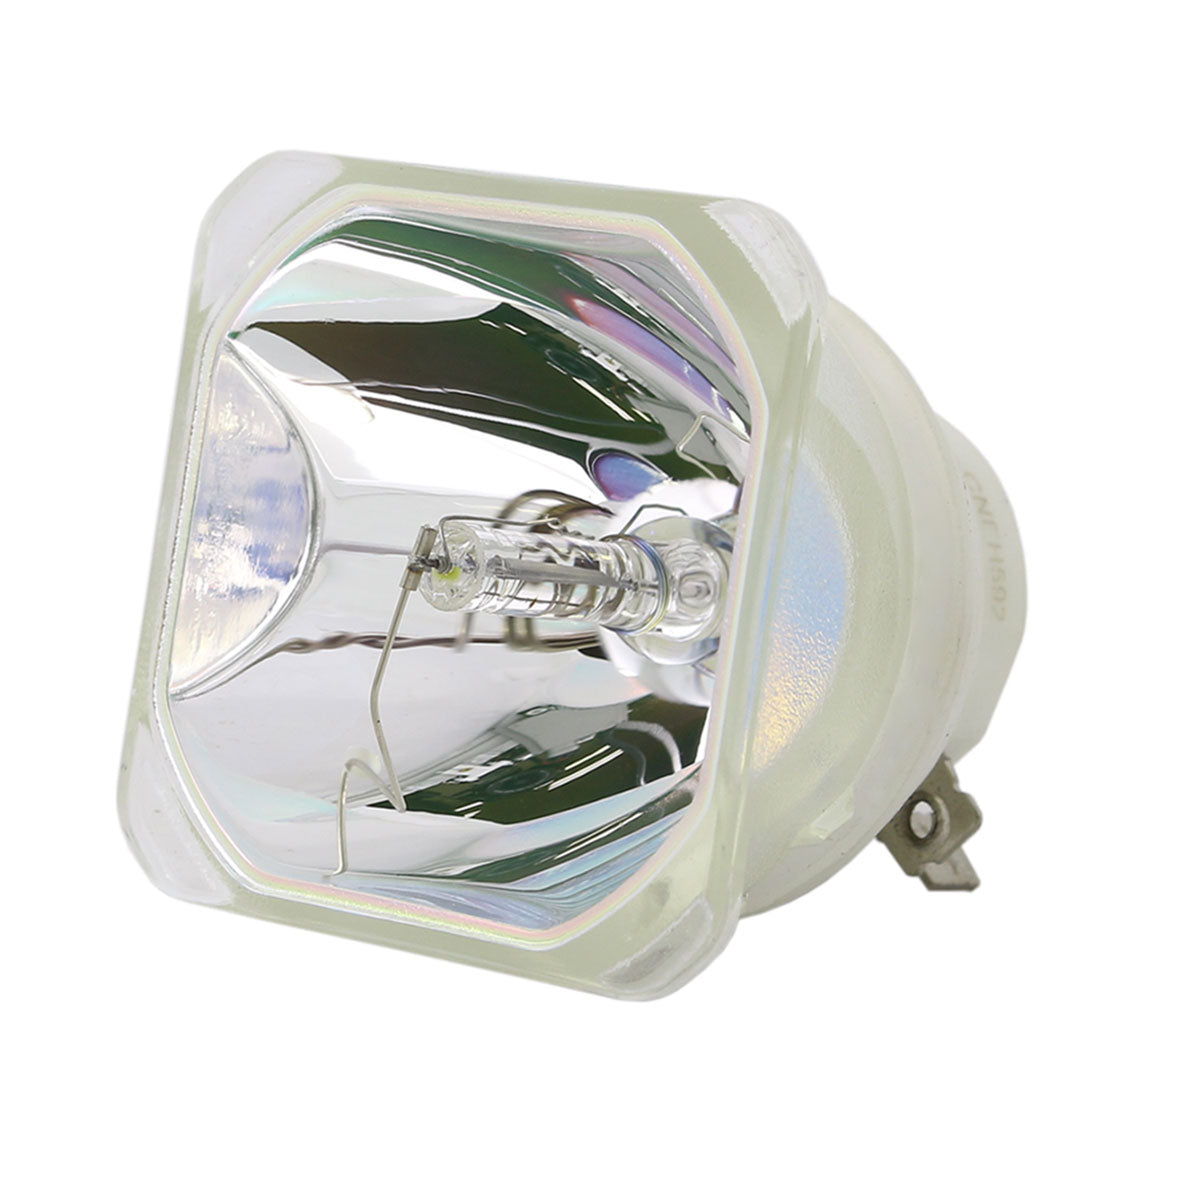 Boxlight Pro7500DP-930 Ushio Projector Bare Lamp